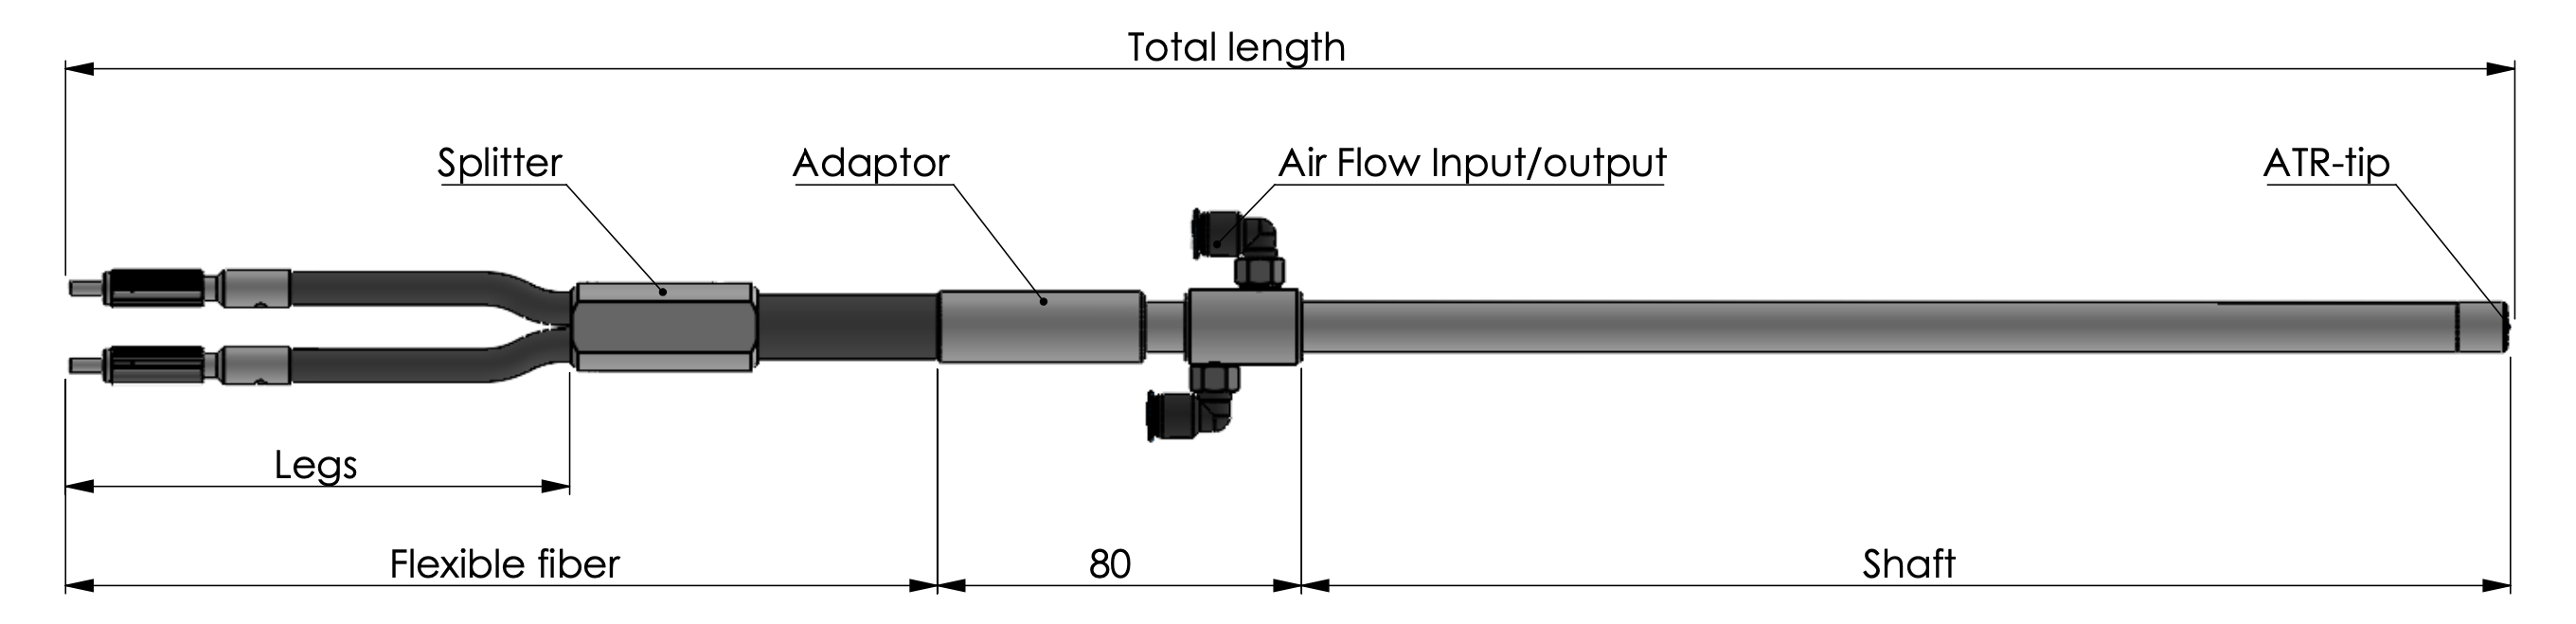 Schematics of a High Temperature ATR-Probe